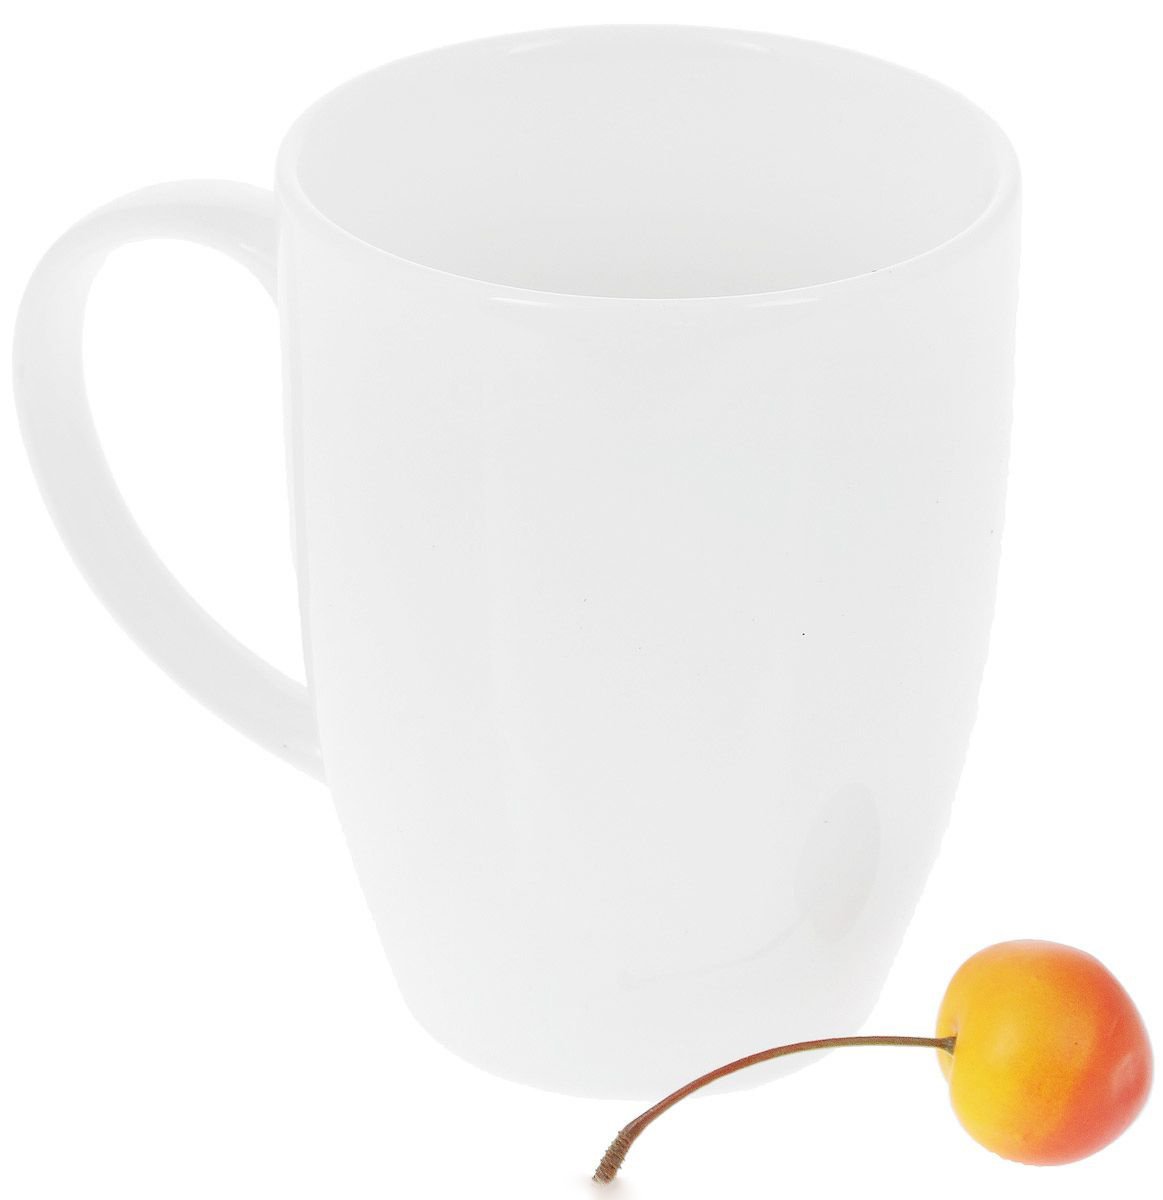 Wilmax Fine Porcelain White Mug 10 oz | 310 ml Wl-993010/a